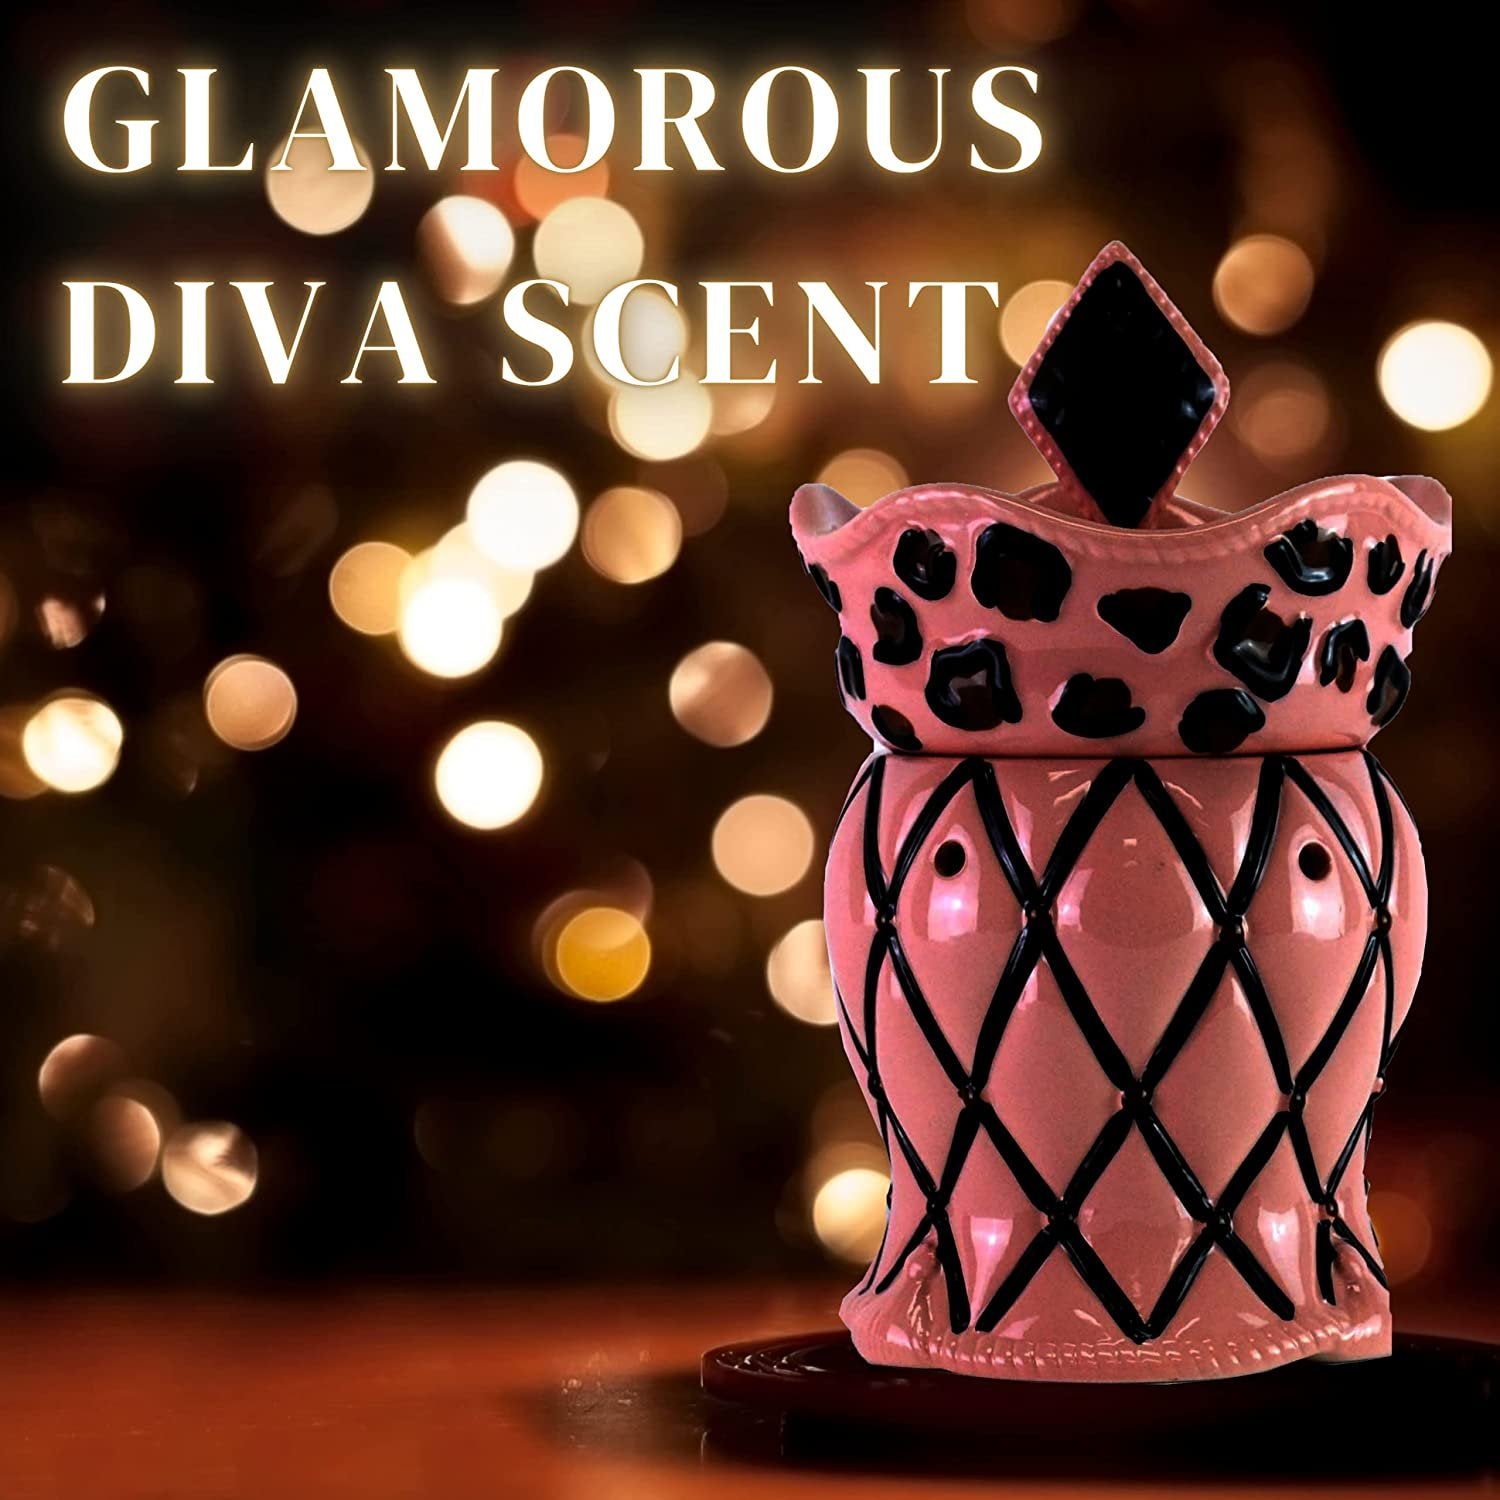 Tyler Candle Company Diva Parisian Gold Fragrance Wax Warmer